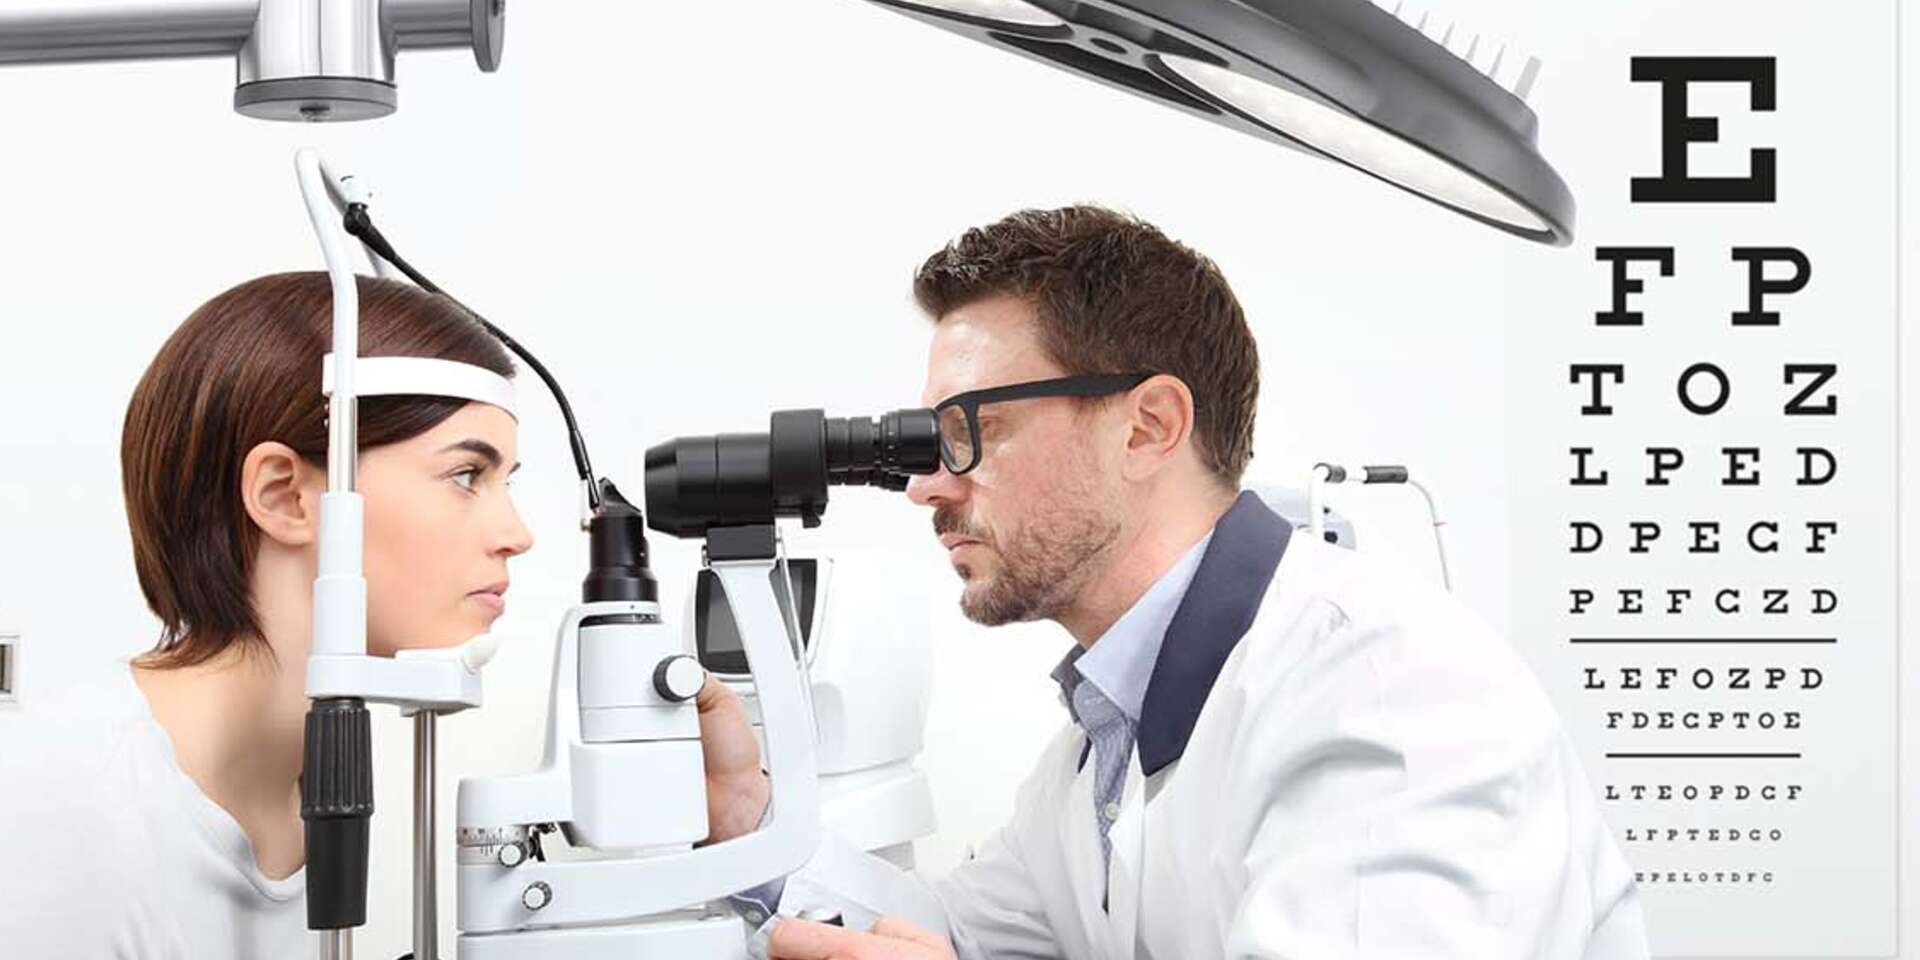 Оптик-оптометрист. Обследование зрения. Оптометрист в оптику. Оптика в медицине. Врач зрение очки